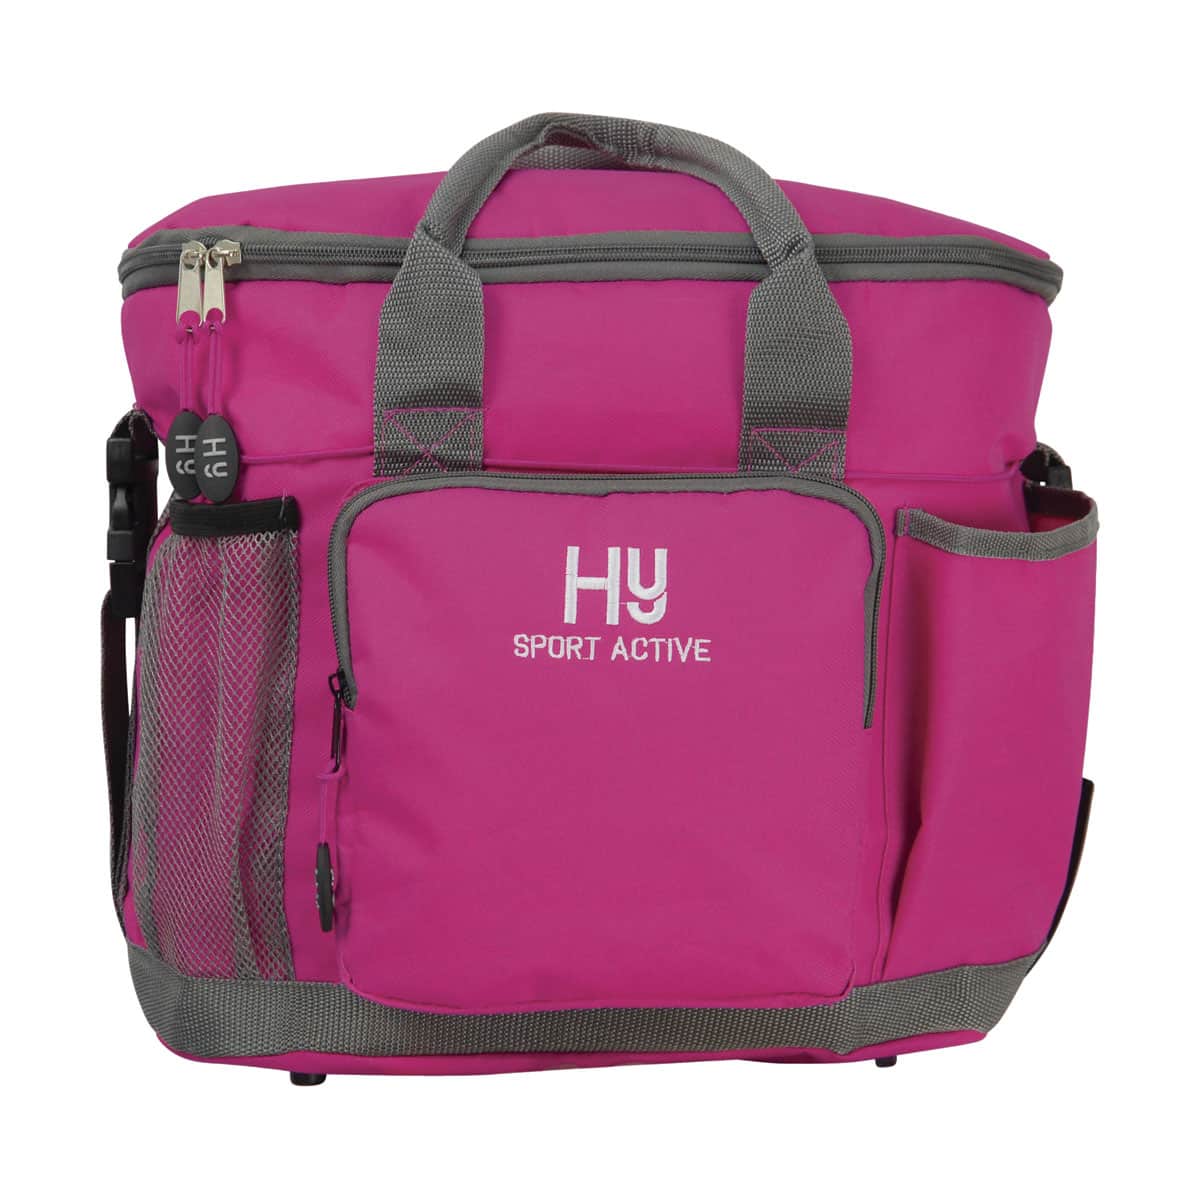 Hy Sport Active Grooming Bag - Port Royal